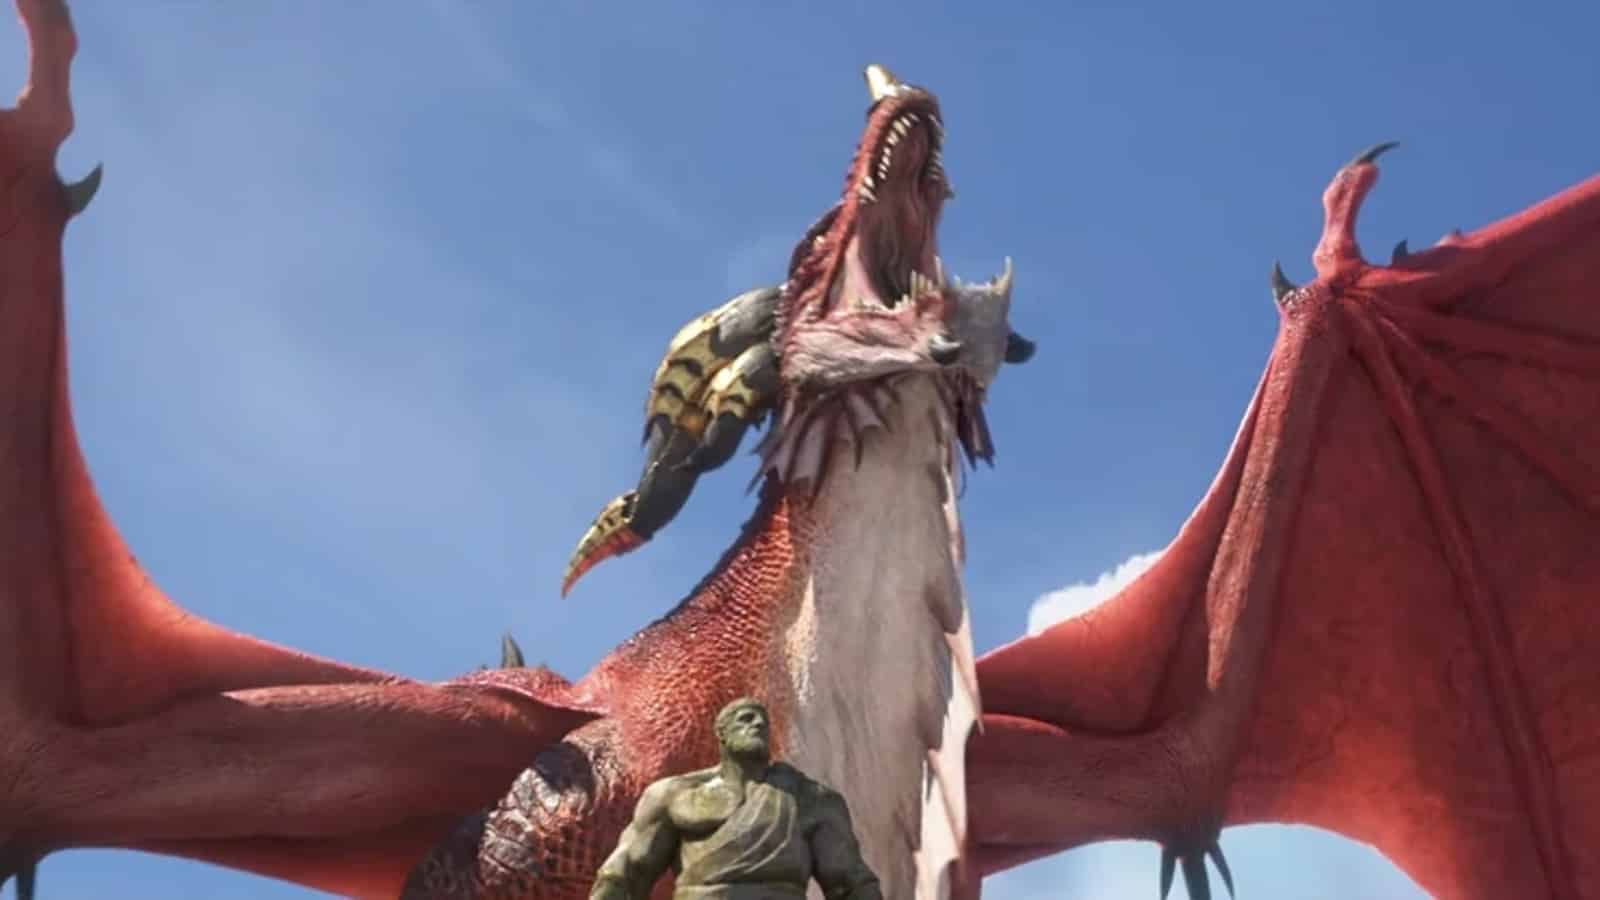 world of warcraft wow alexstrasza in dragon form roars with rock titan